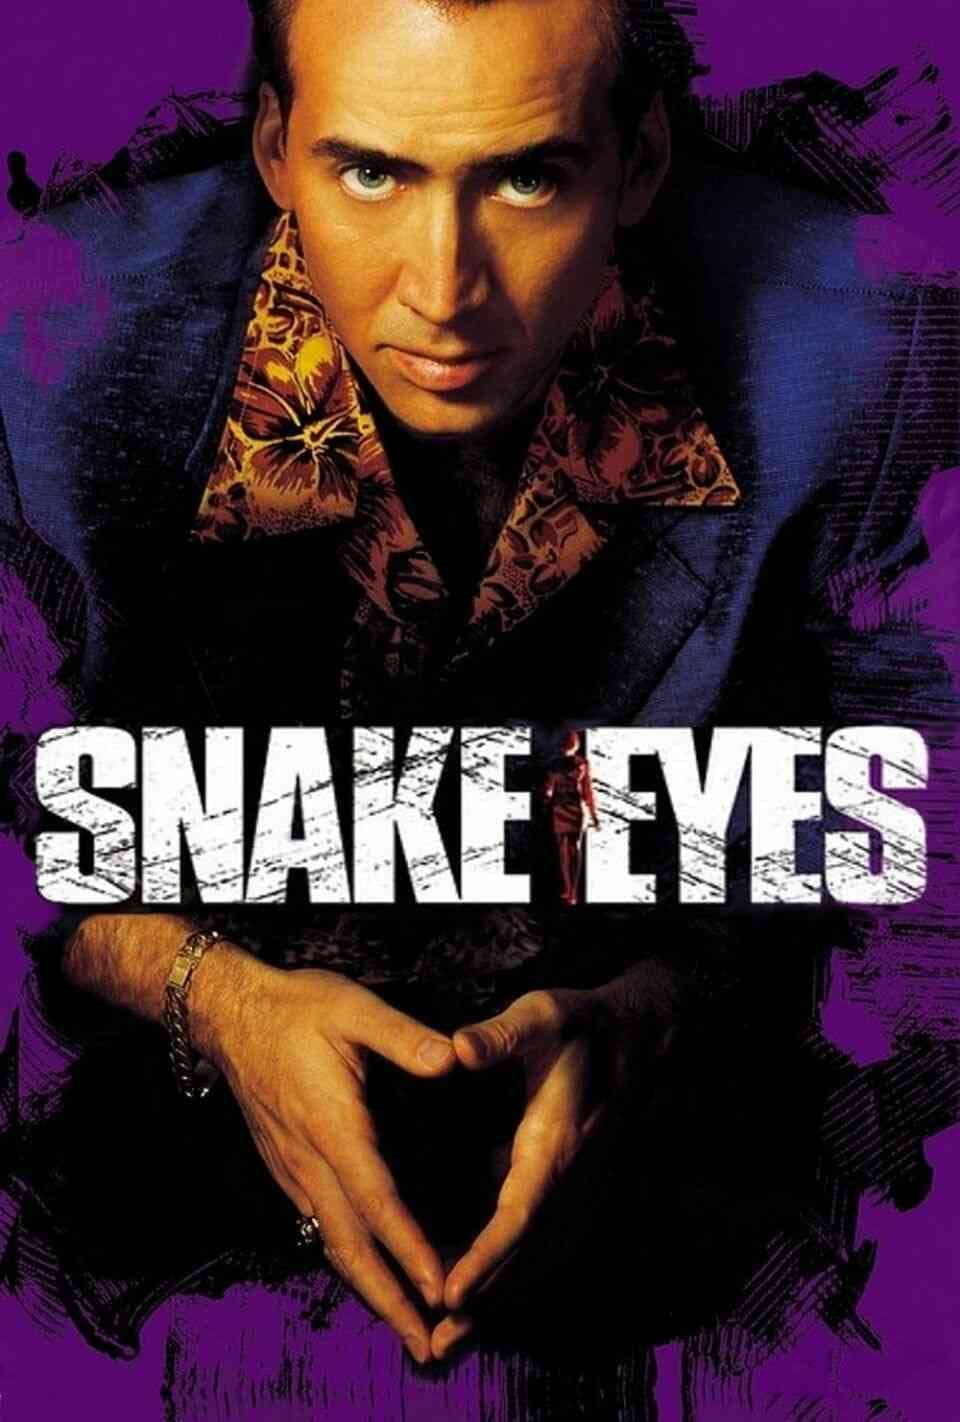 Read Snake Eyes screenplay (poster)